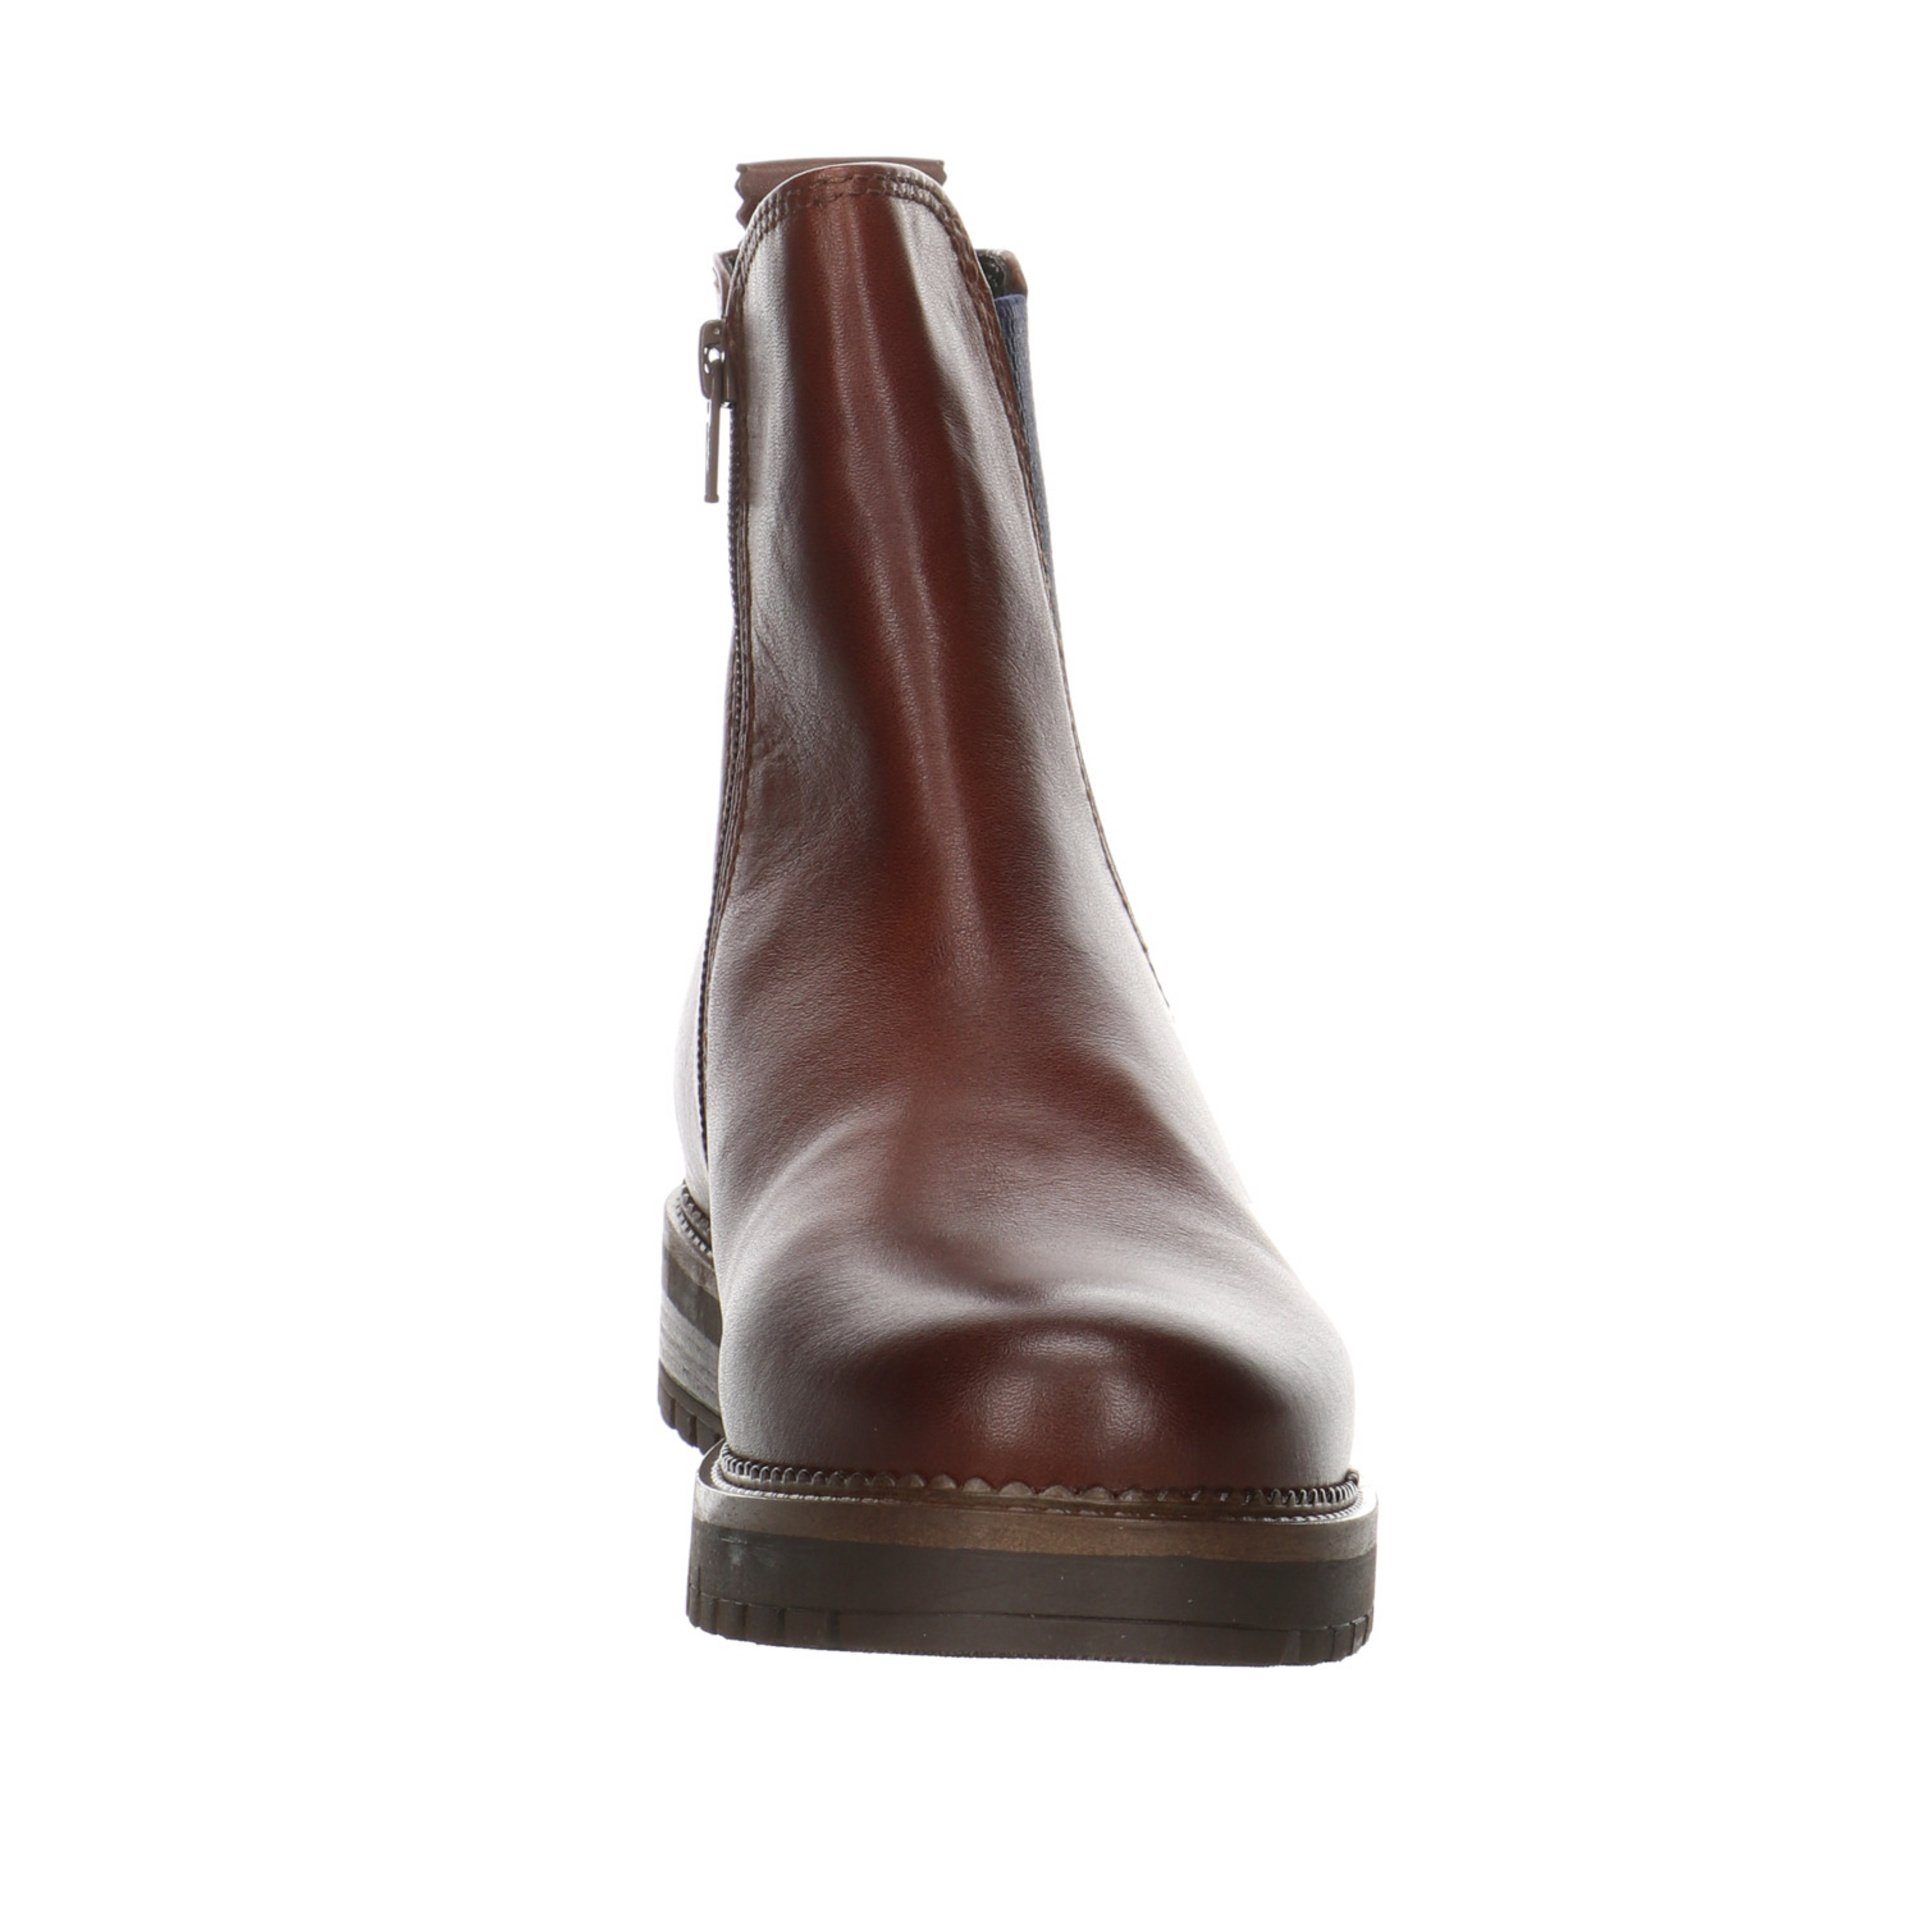 Gabor Damen Stiefel Schuhe Chelsea Leder-/Textilkombination (river) Boots Stiefel sattel